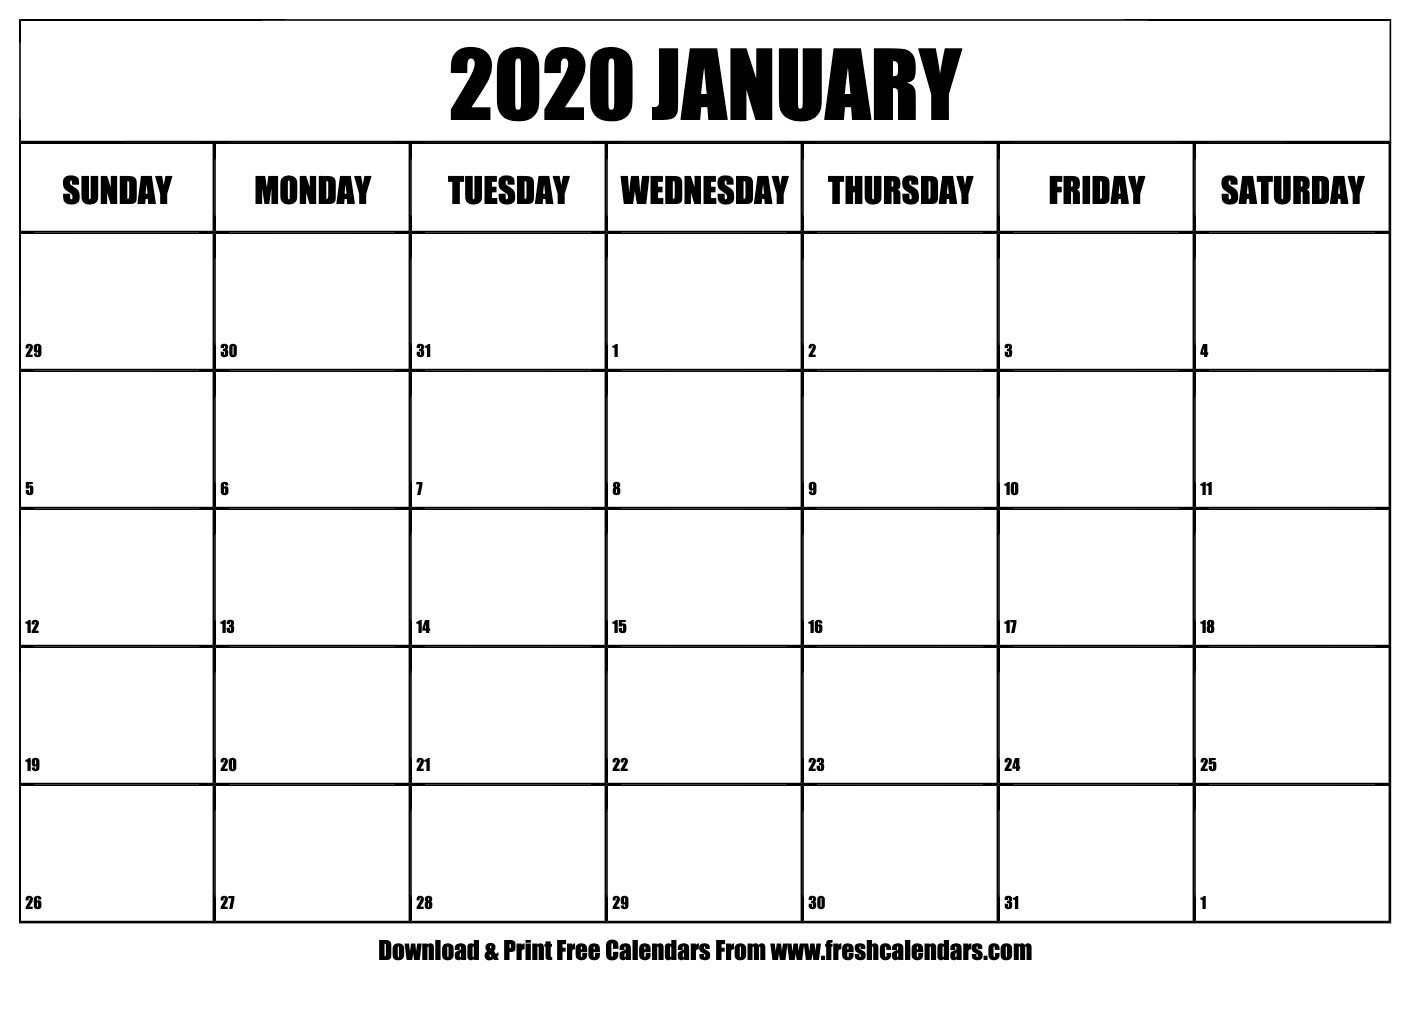 January 2020 Calendar Printable - Fresh Calendars-January 2020 Calendar Excel